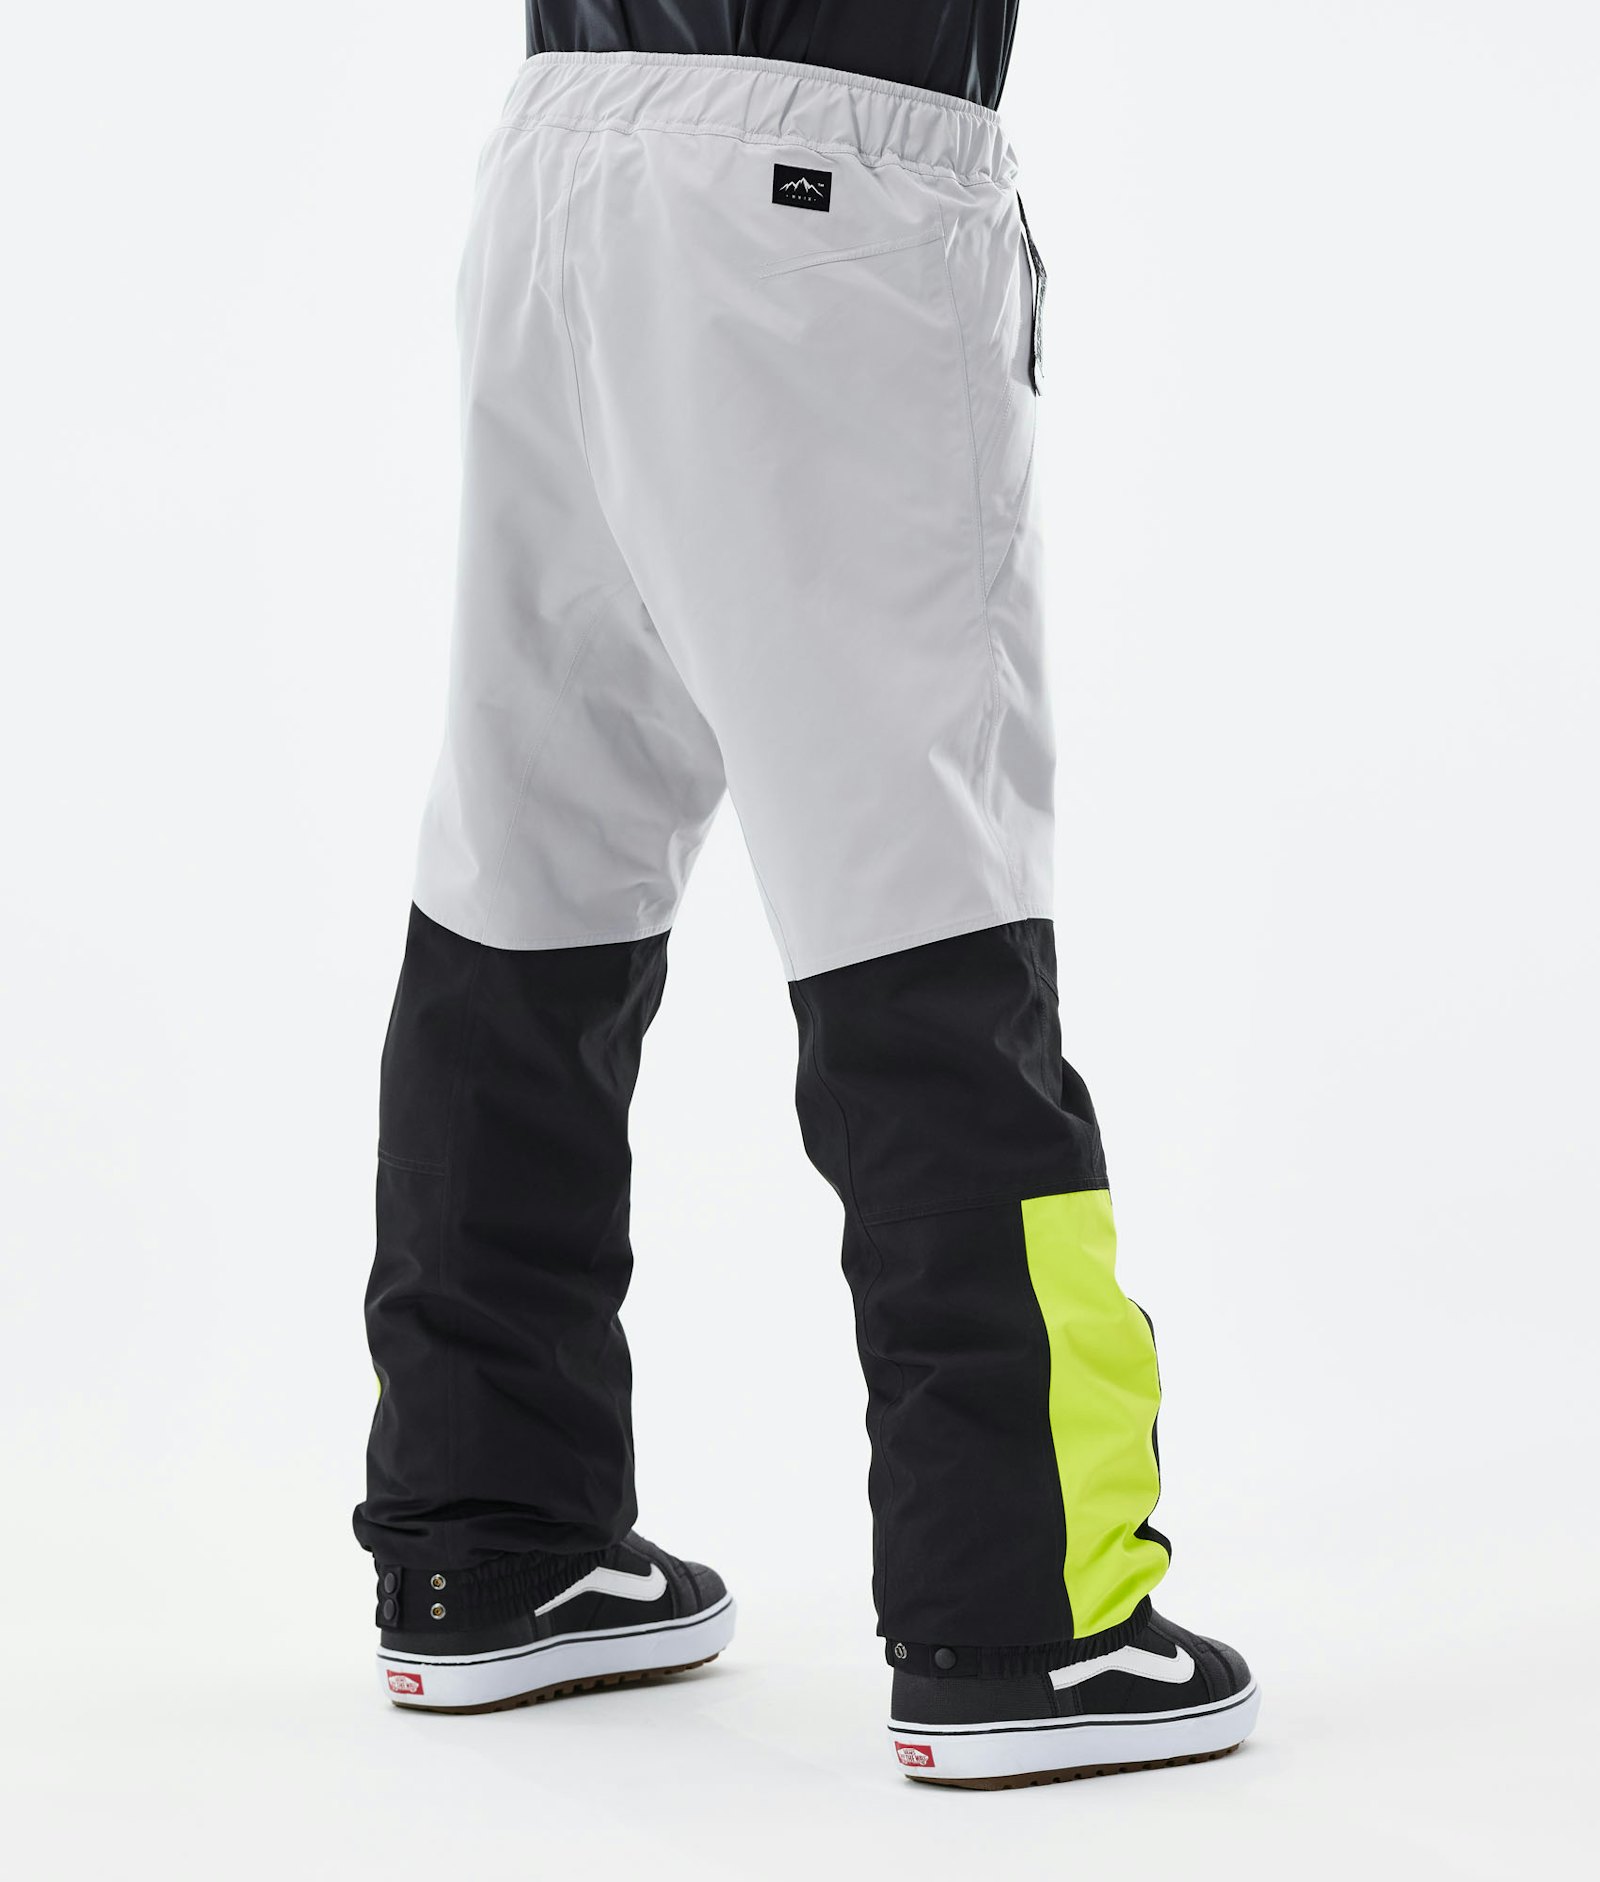 Blizzard LE Pantalones Snowboard Hombre Limited Edition Multicolor Light Grey